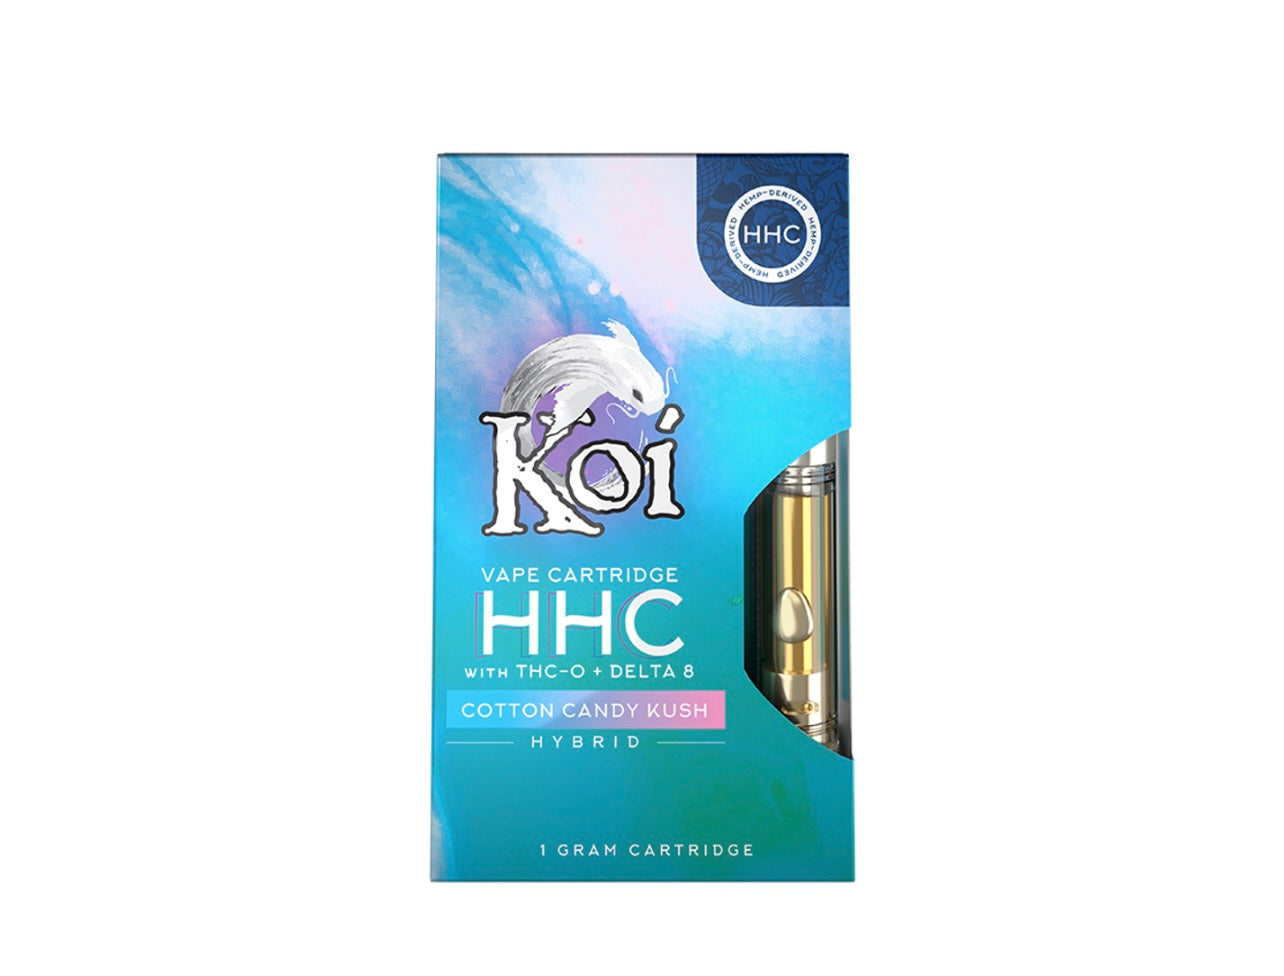 Koi HHC Vape Cartridge cotton candy